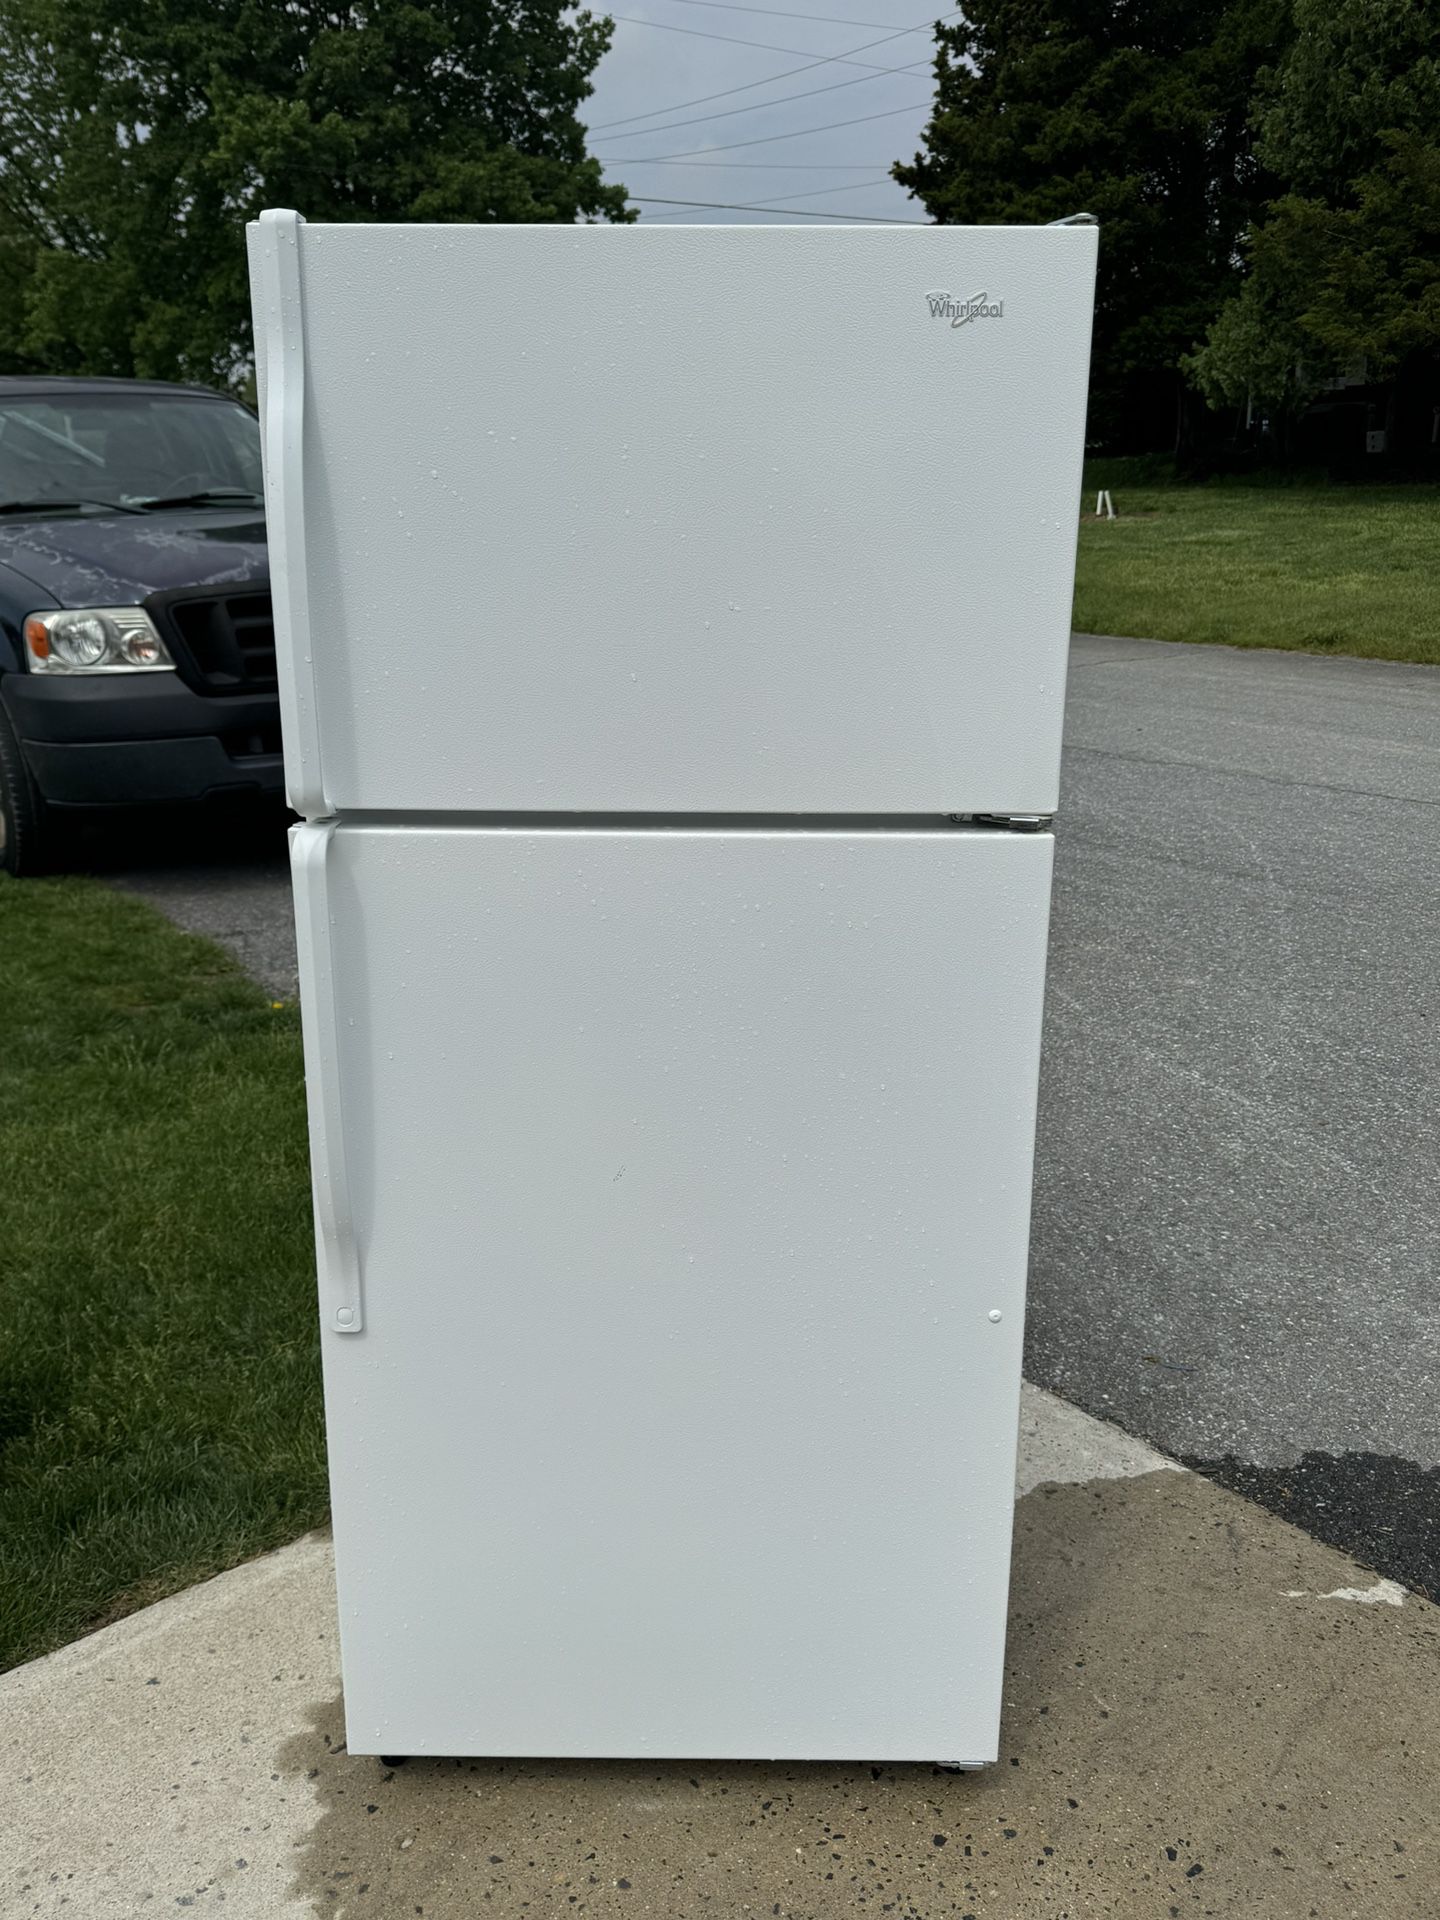 Whirlpool 14 Ft.³ Refrigerator/Freezer - VG, Working Condition- Marietta, Pa Pick Up